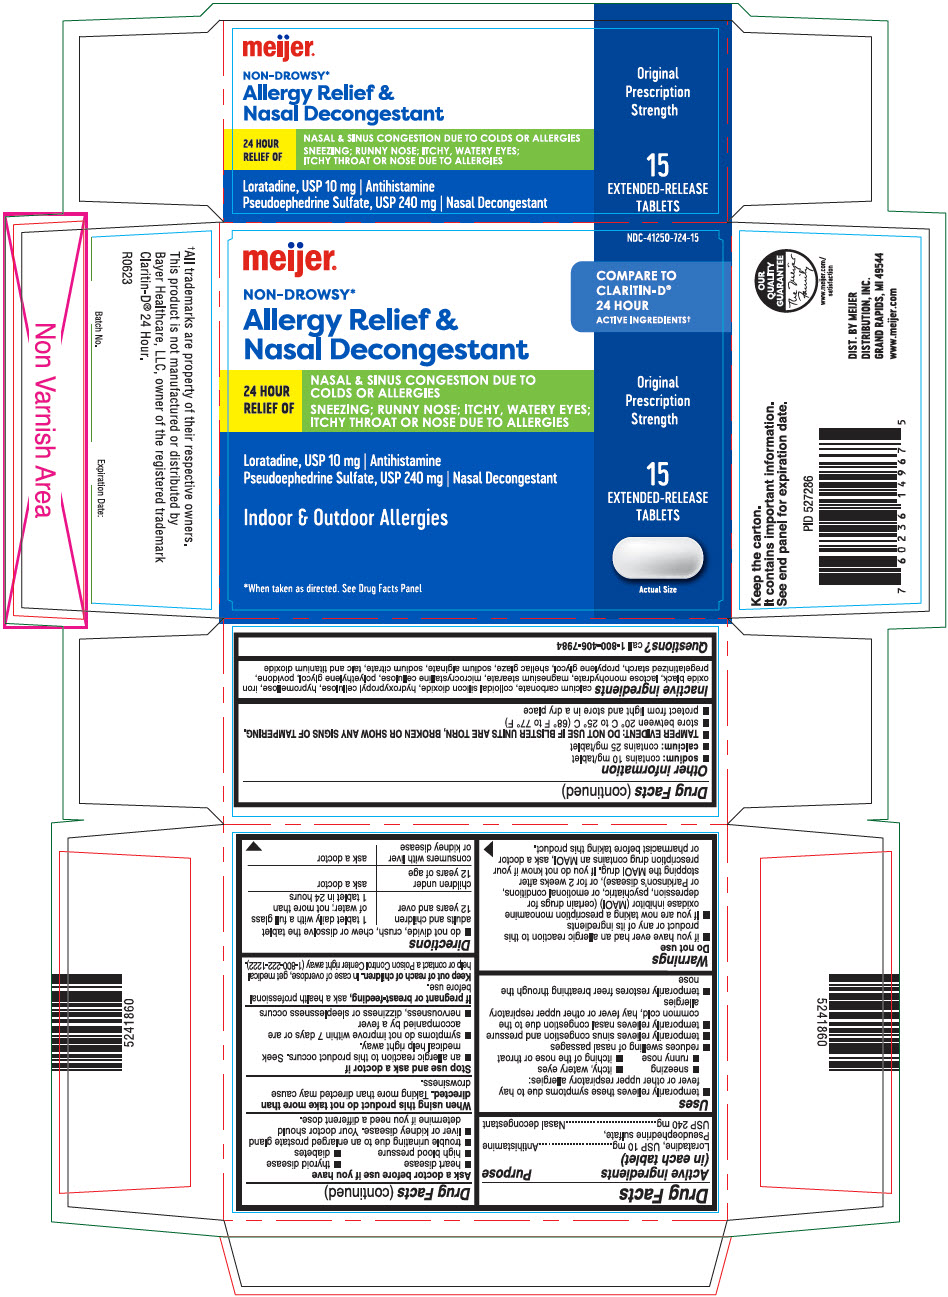 PRINCIPAL DISPLAY PANEL - 15 Tablet Blister Pack Carton